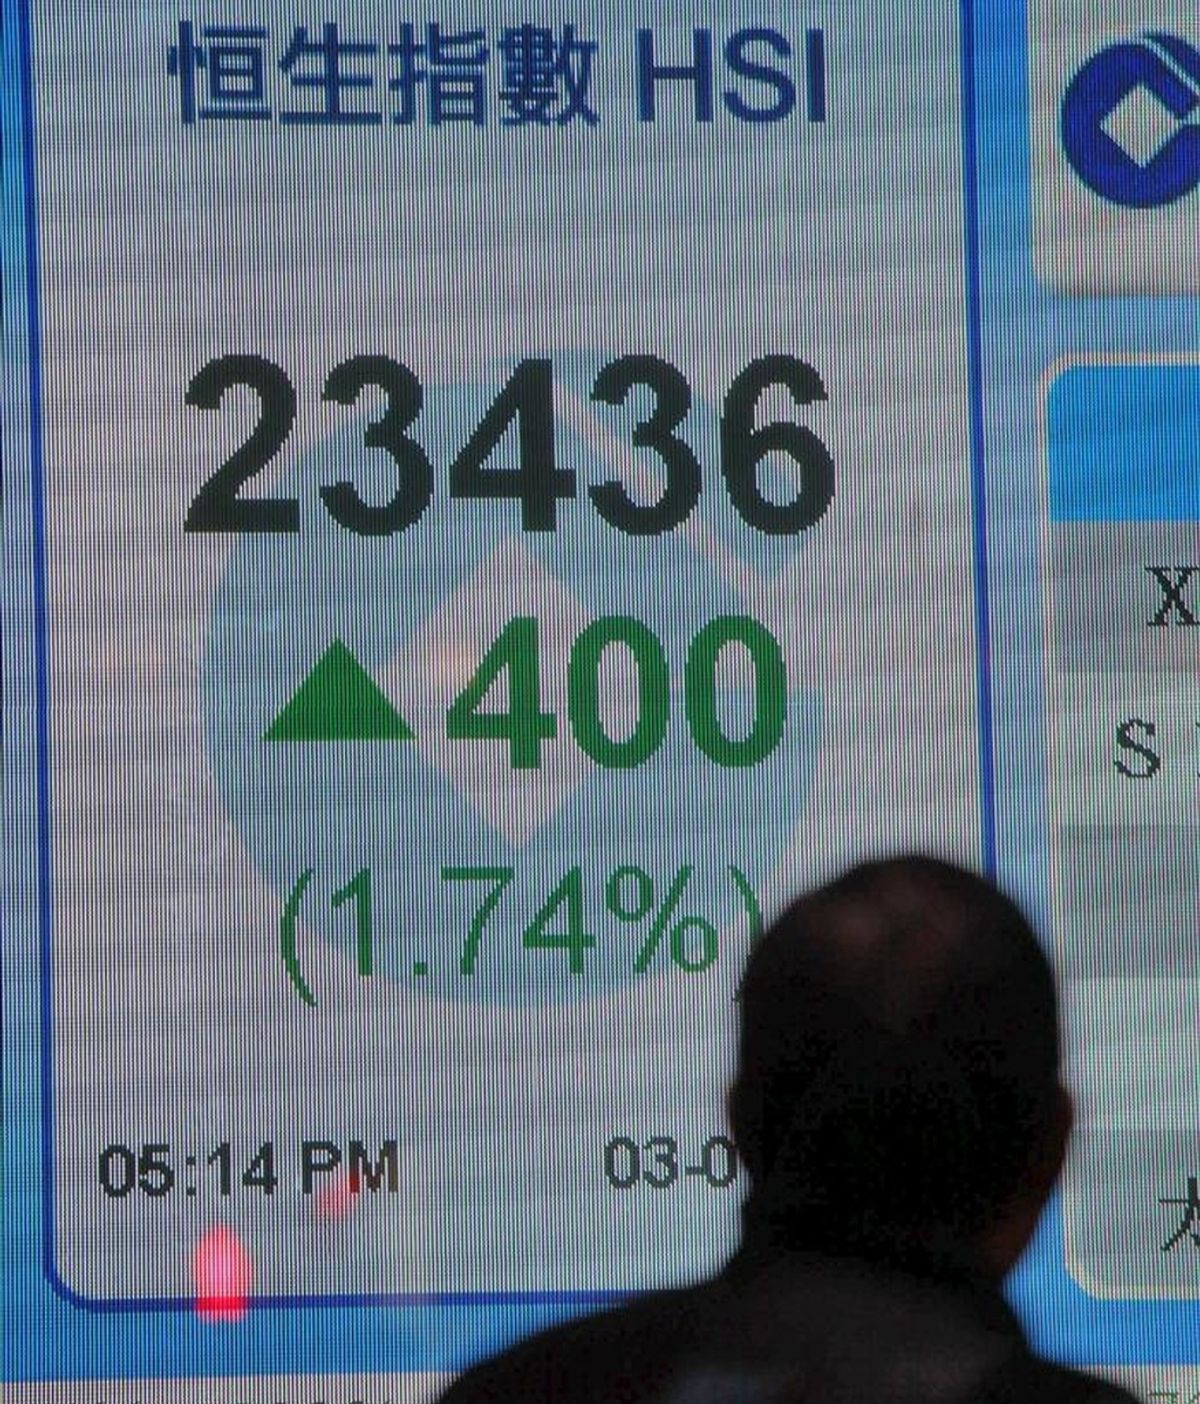 Un hombre camina junto a una pantalla informativa de los valores del índice Hang Seng en un banco en Hong Kong (China). EFE/Archivo